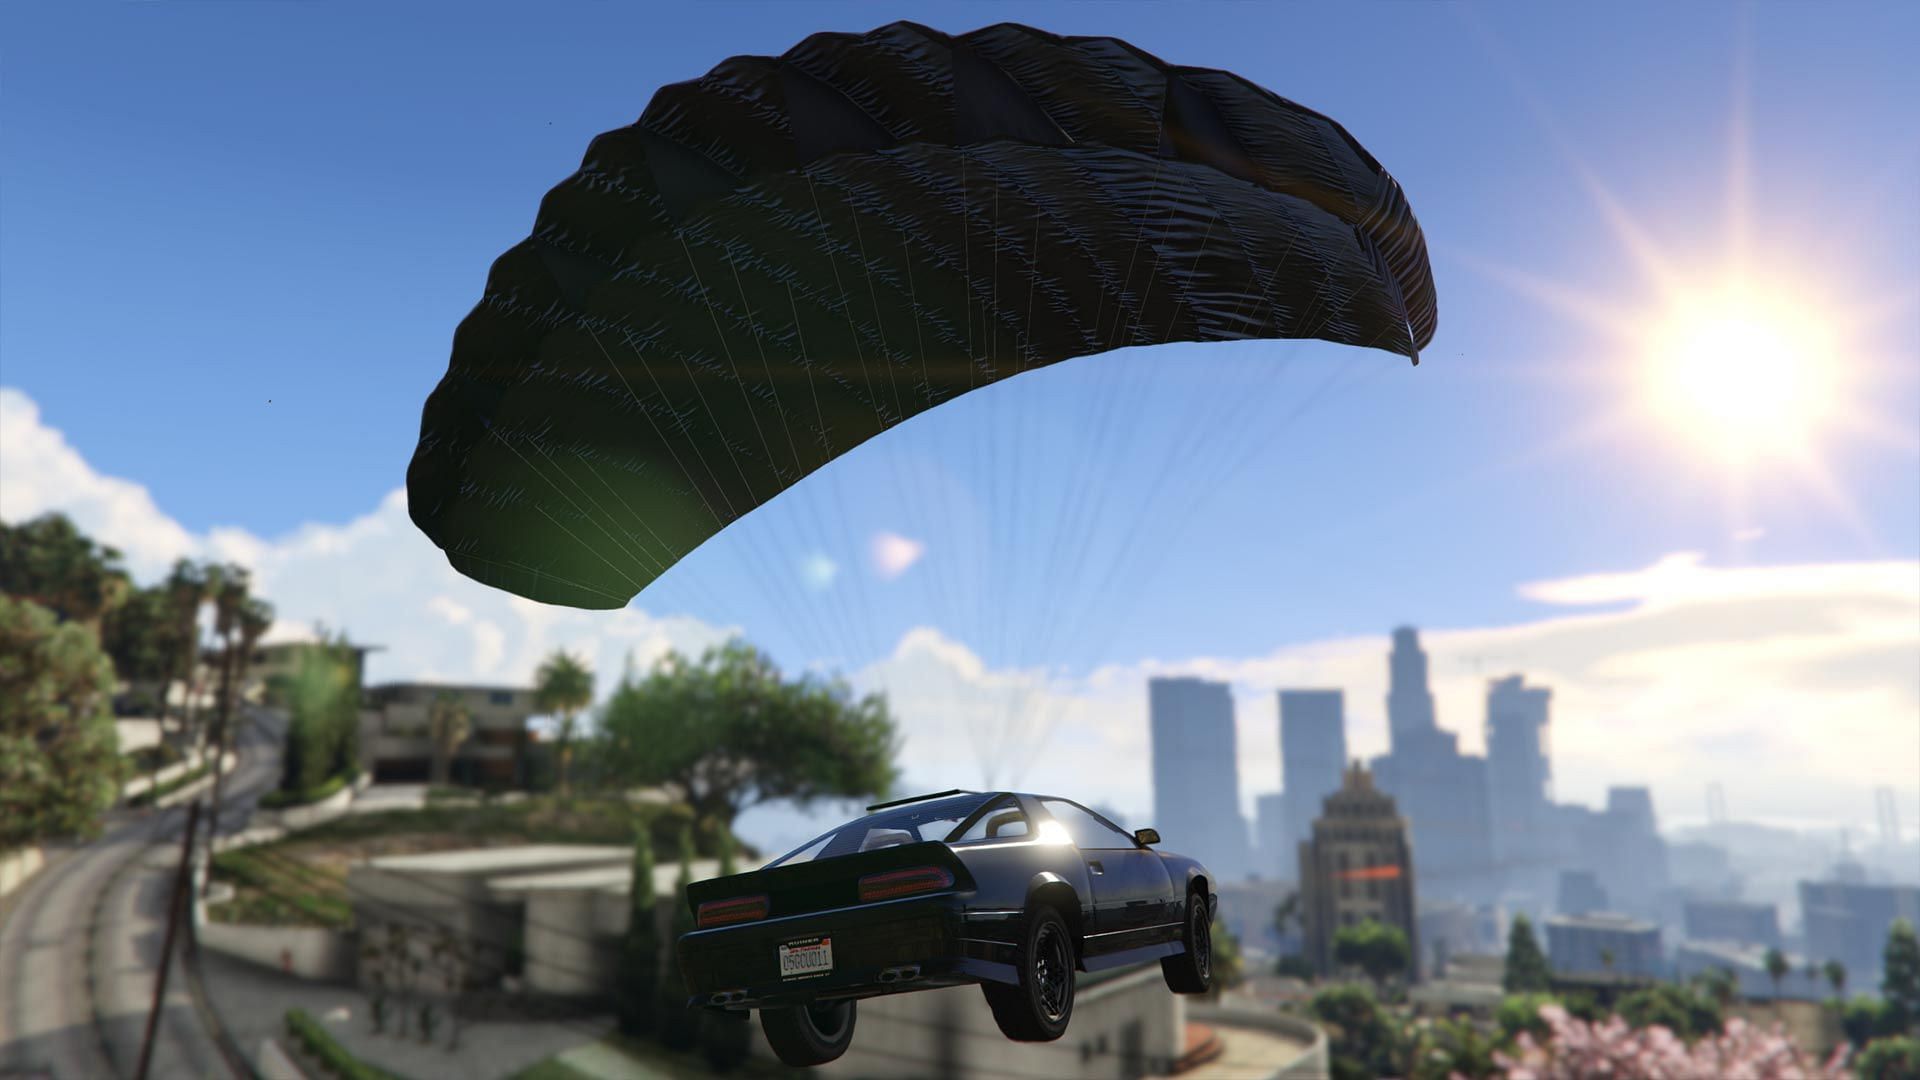 It also has a parachute (Image via Rockstar Games)